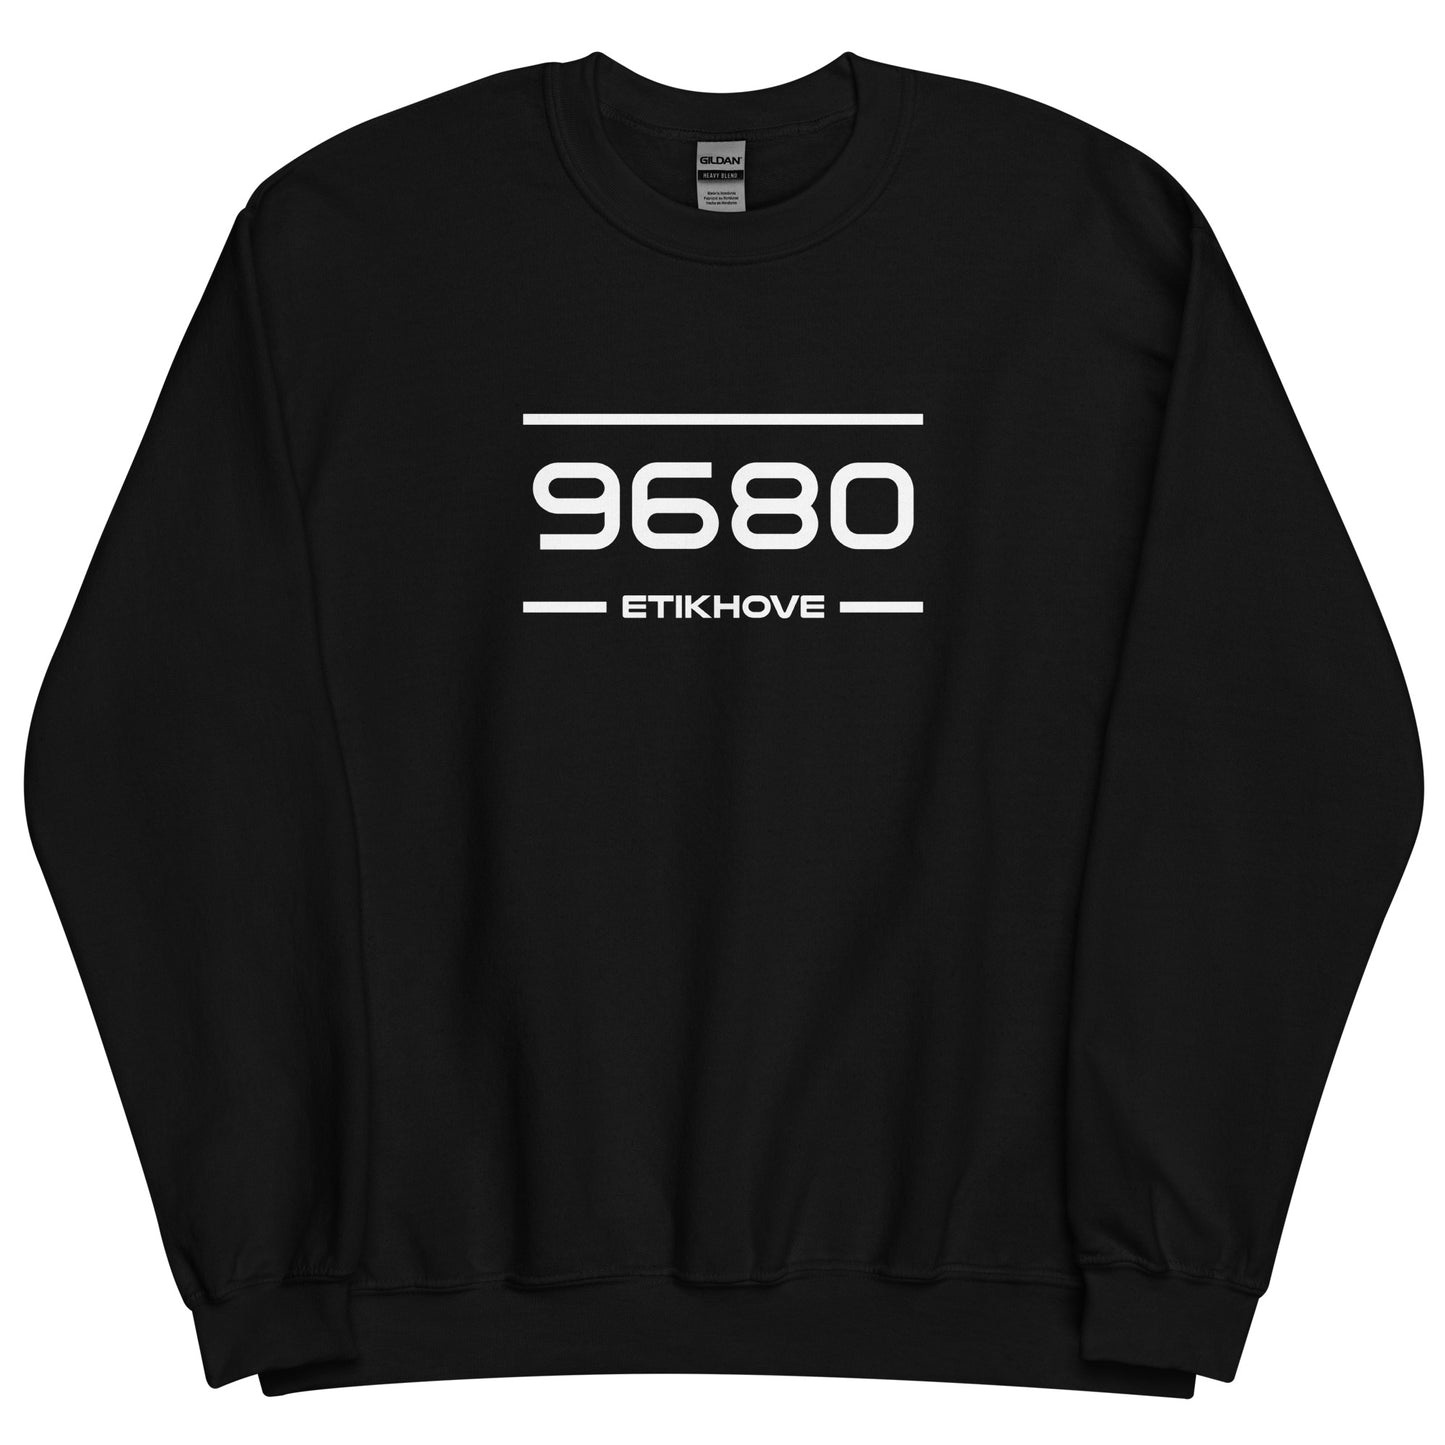 Sweater - 9680 - Etikhove (M/V)